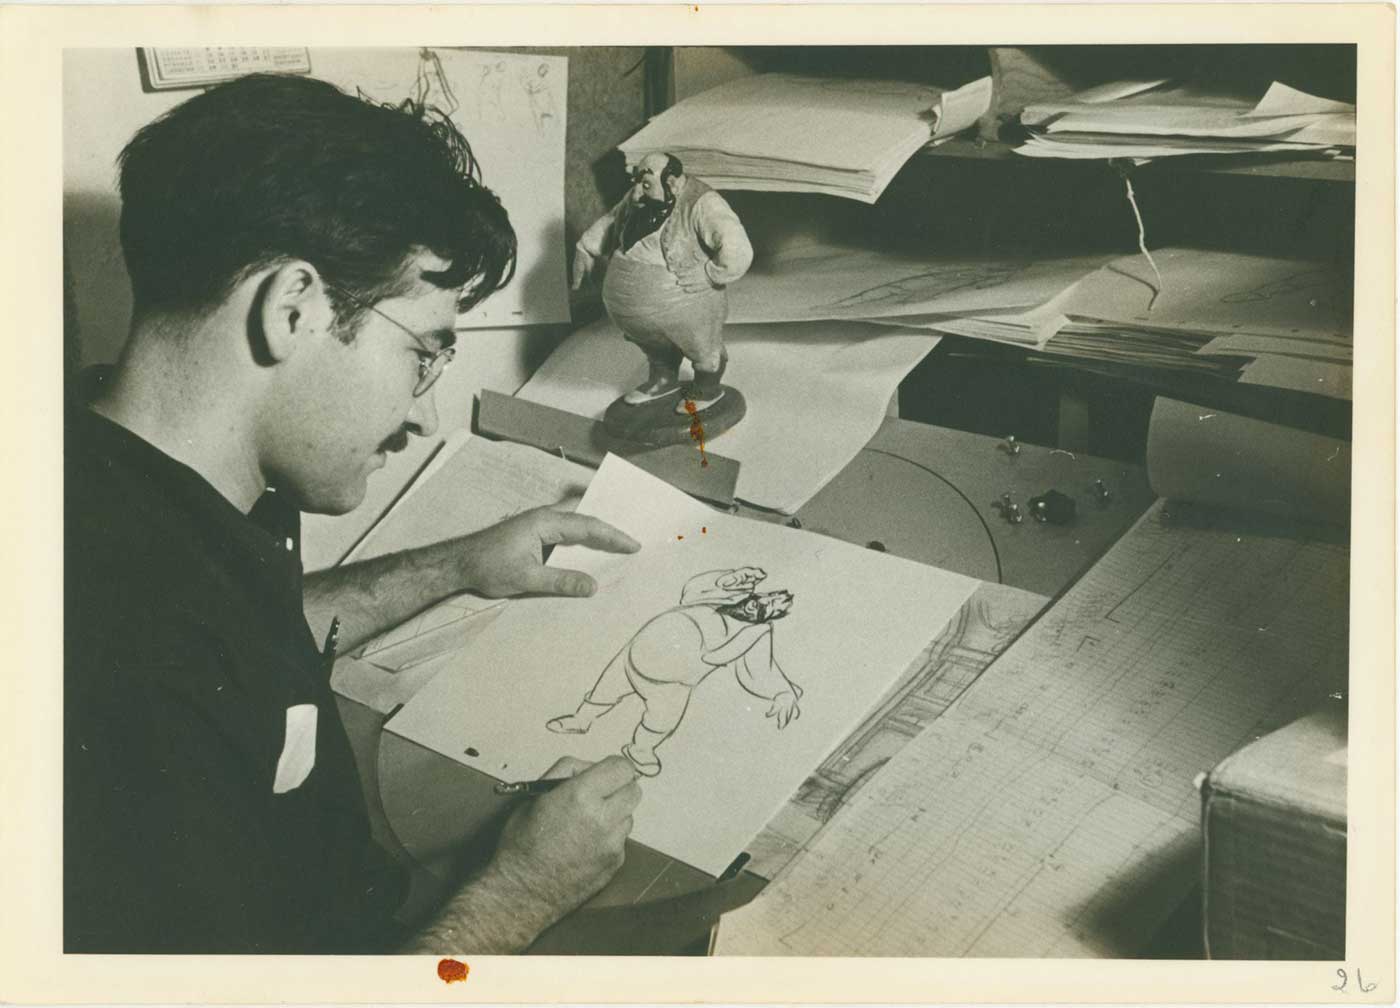 Photograph of Vladimir Tytla; collection of the Walt Disney Family Foundation, © Disney